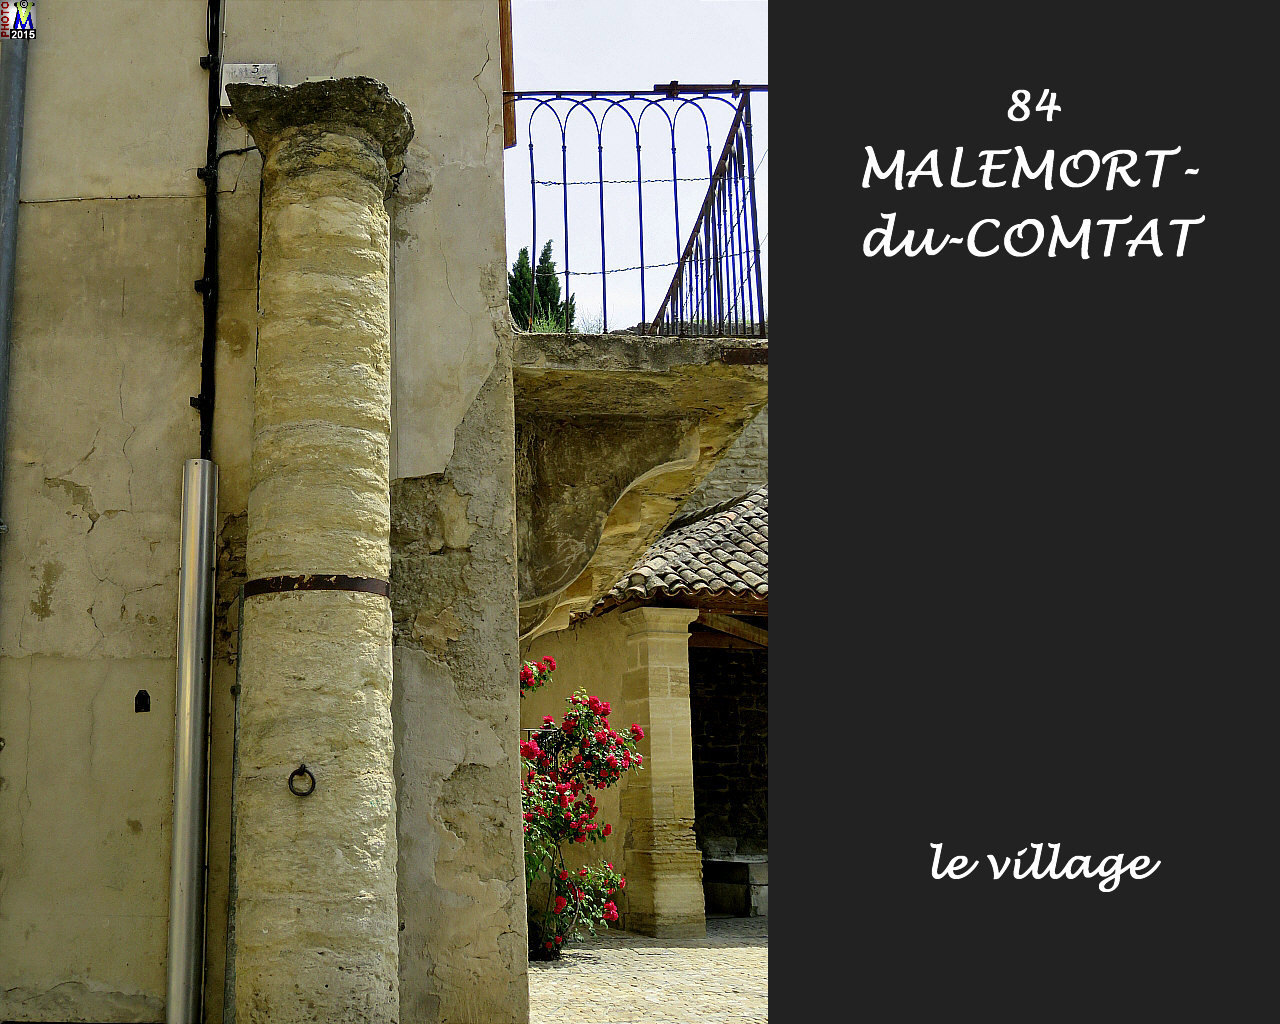 84MALEMORT-COMTAT_village_106.jpg